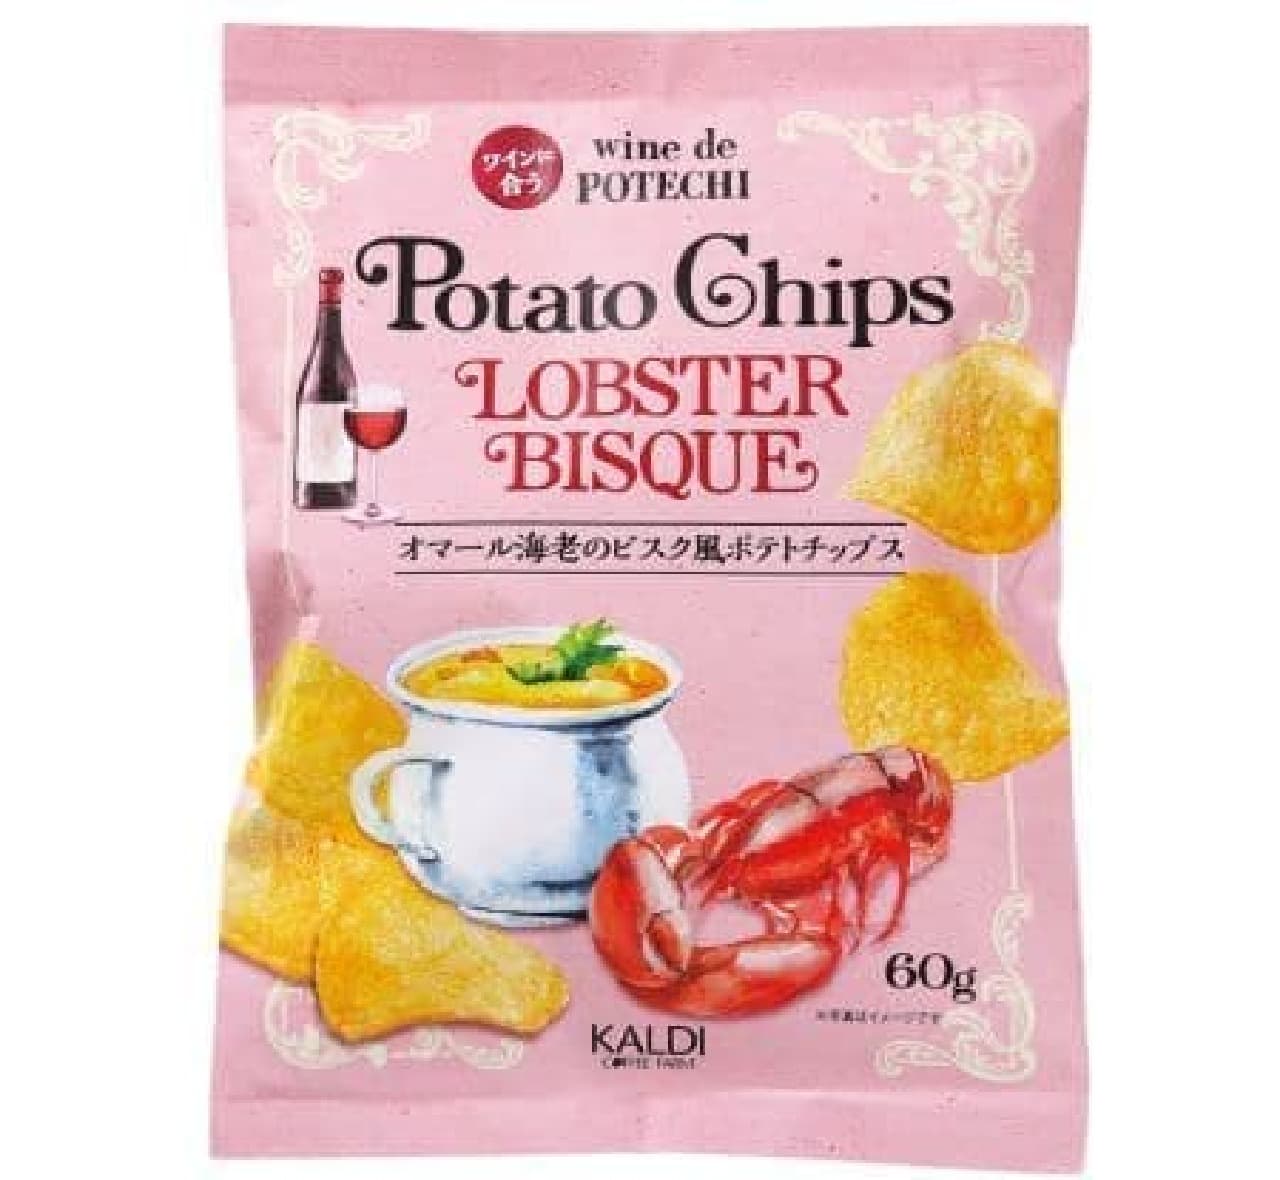 KALDI "Original Omar Shrimp Bisque Potato Chips"